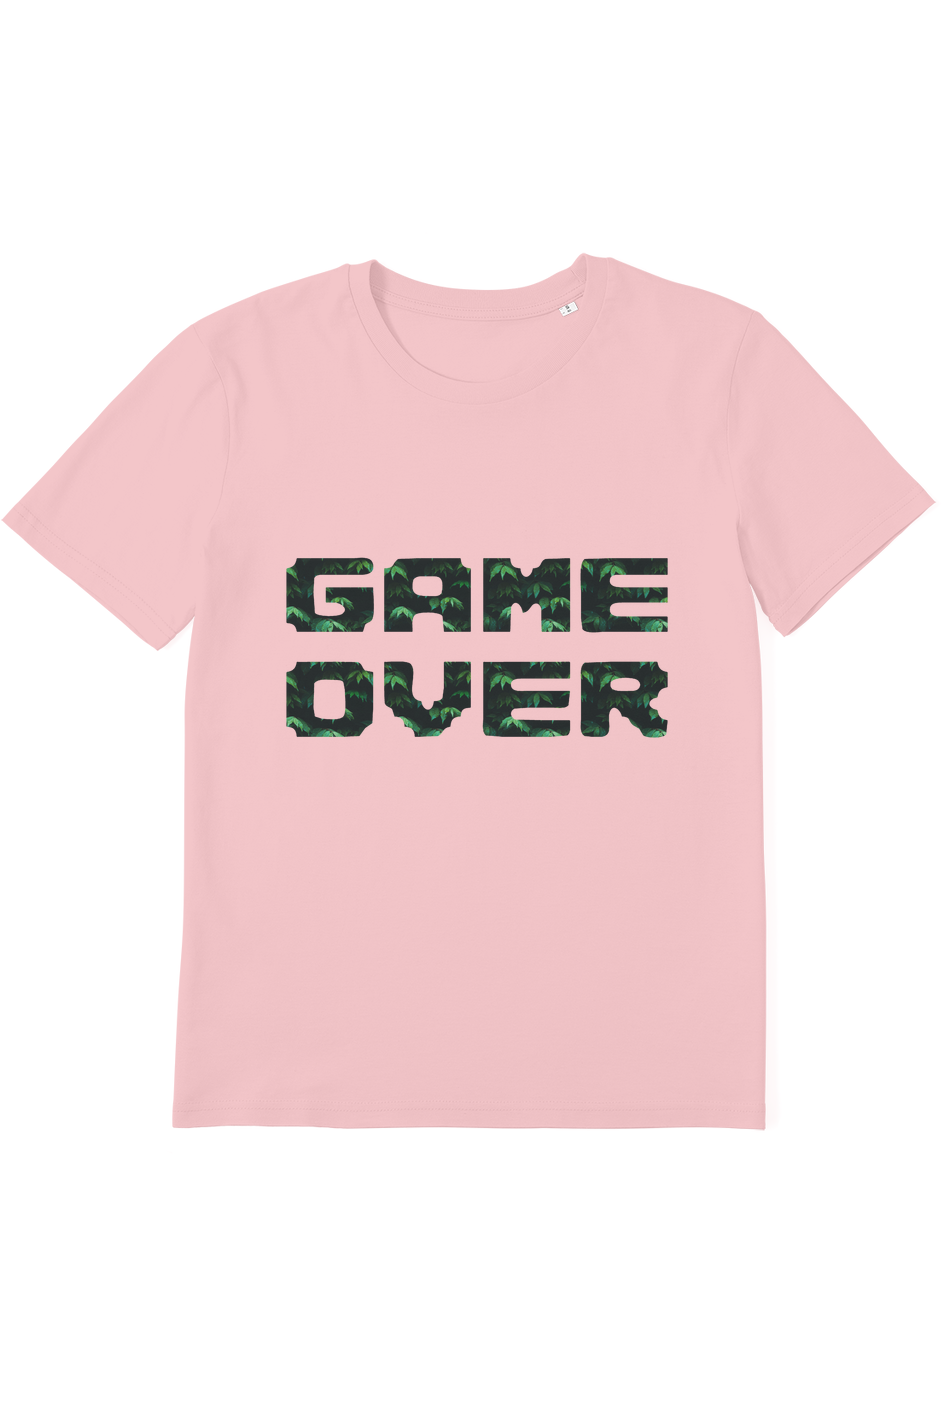 Game Over Organic T-Shirt vegan, sustainable, organic streetwear, - TRVTH ORGANIC CLOTHING